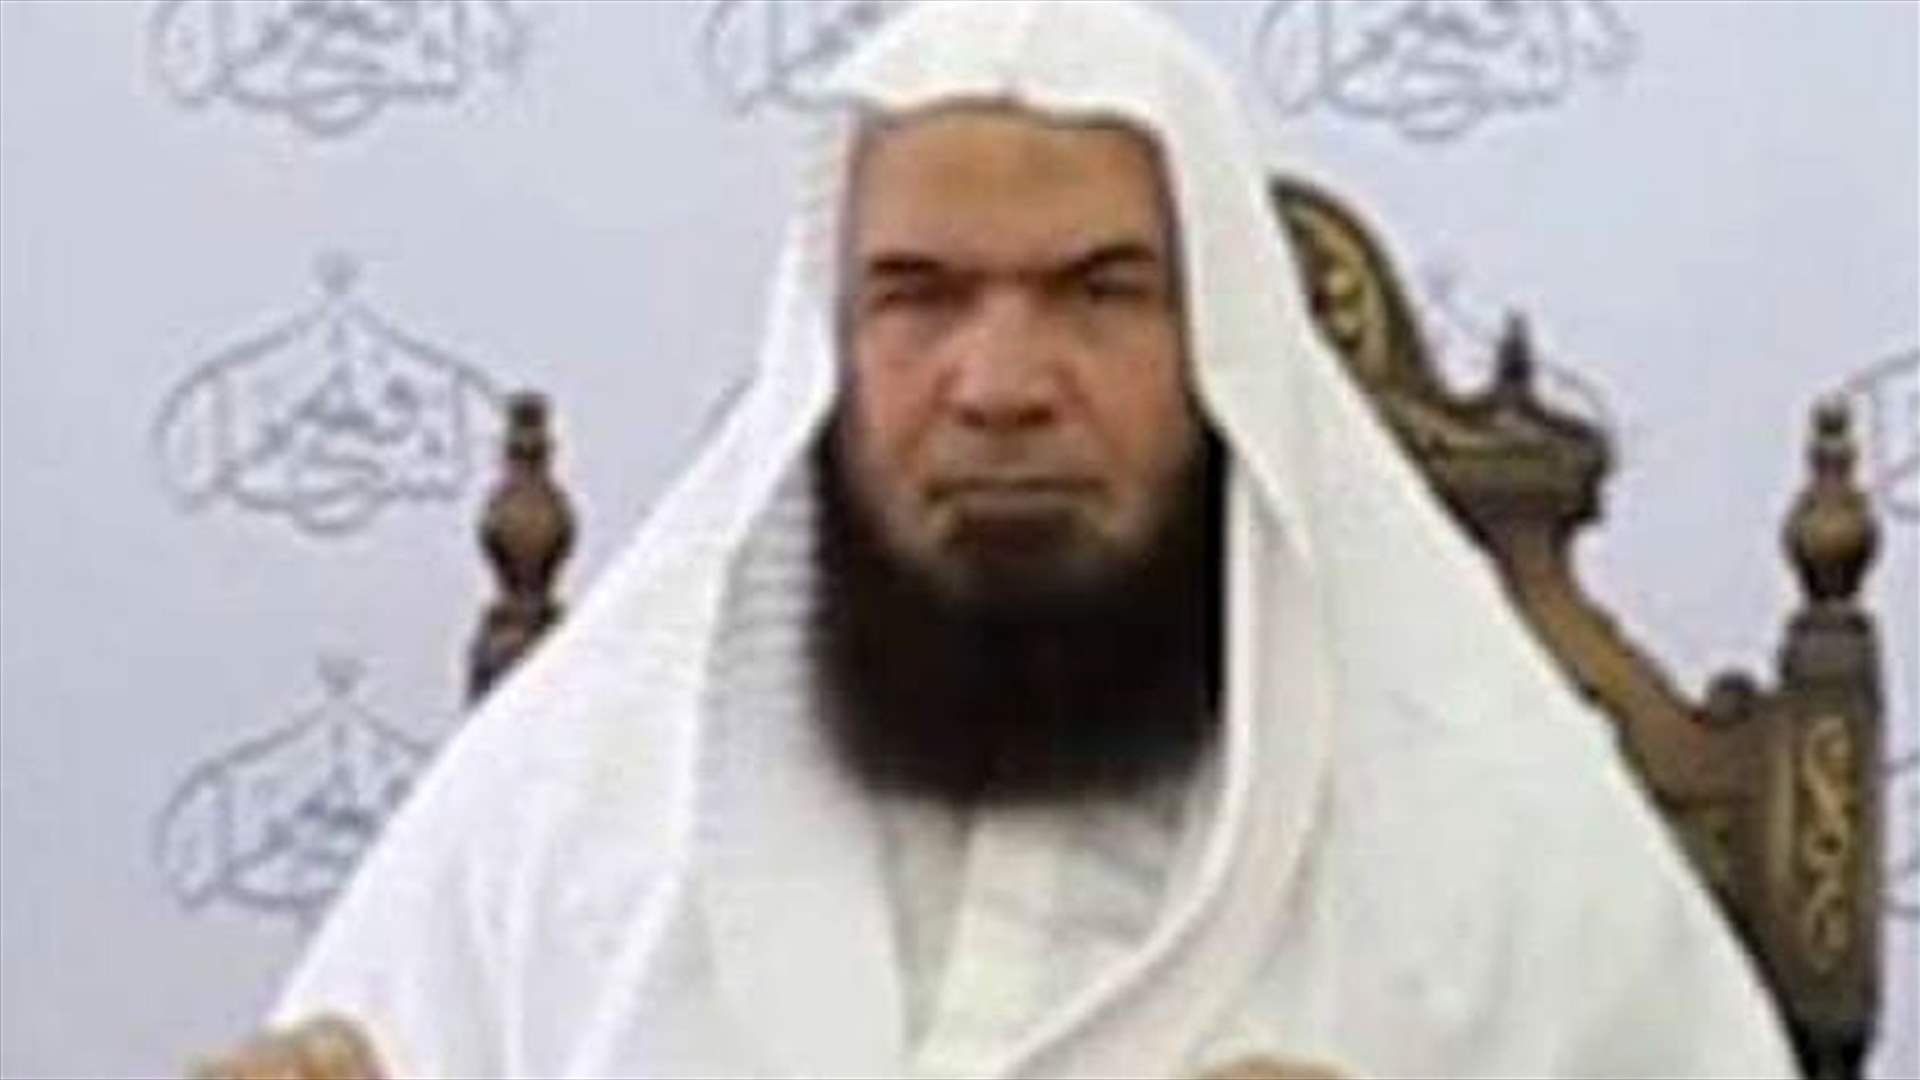 Prominent Egyptian al Qaeda figure killed in Syria -jihadist sources